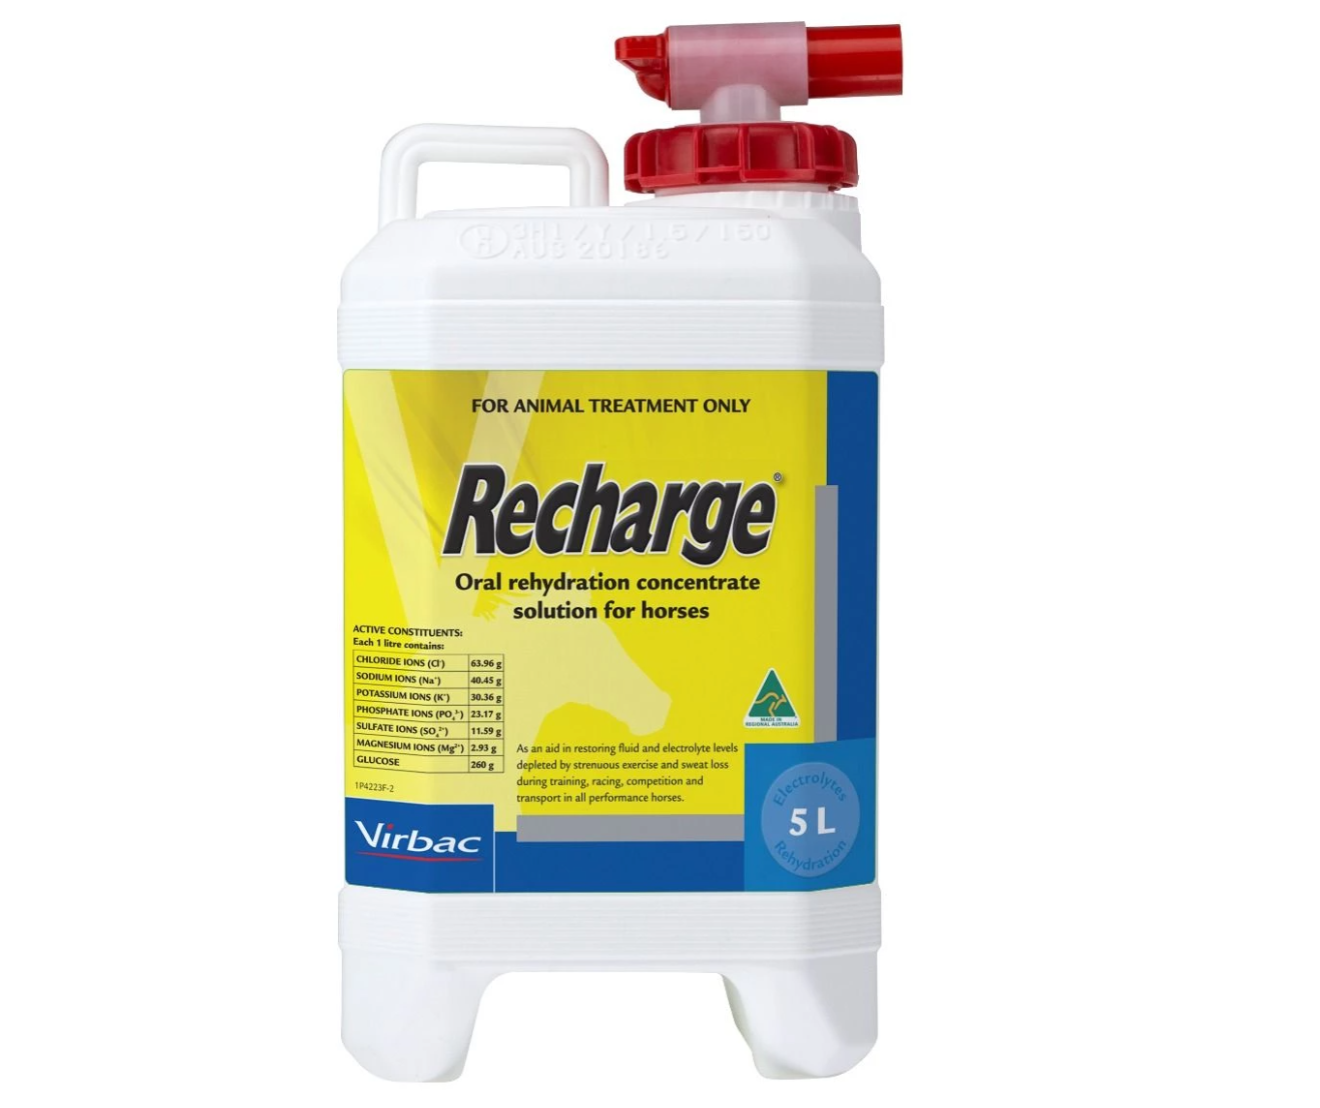 Virbac Recharge Rehydrating